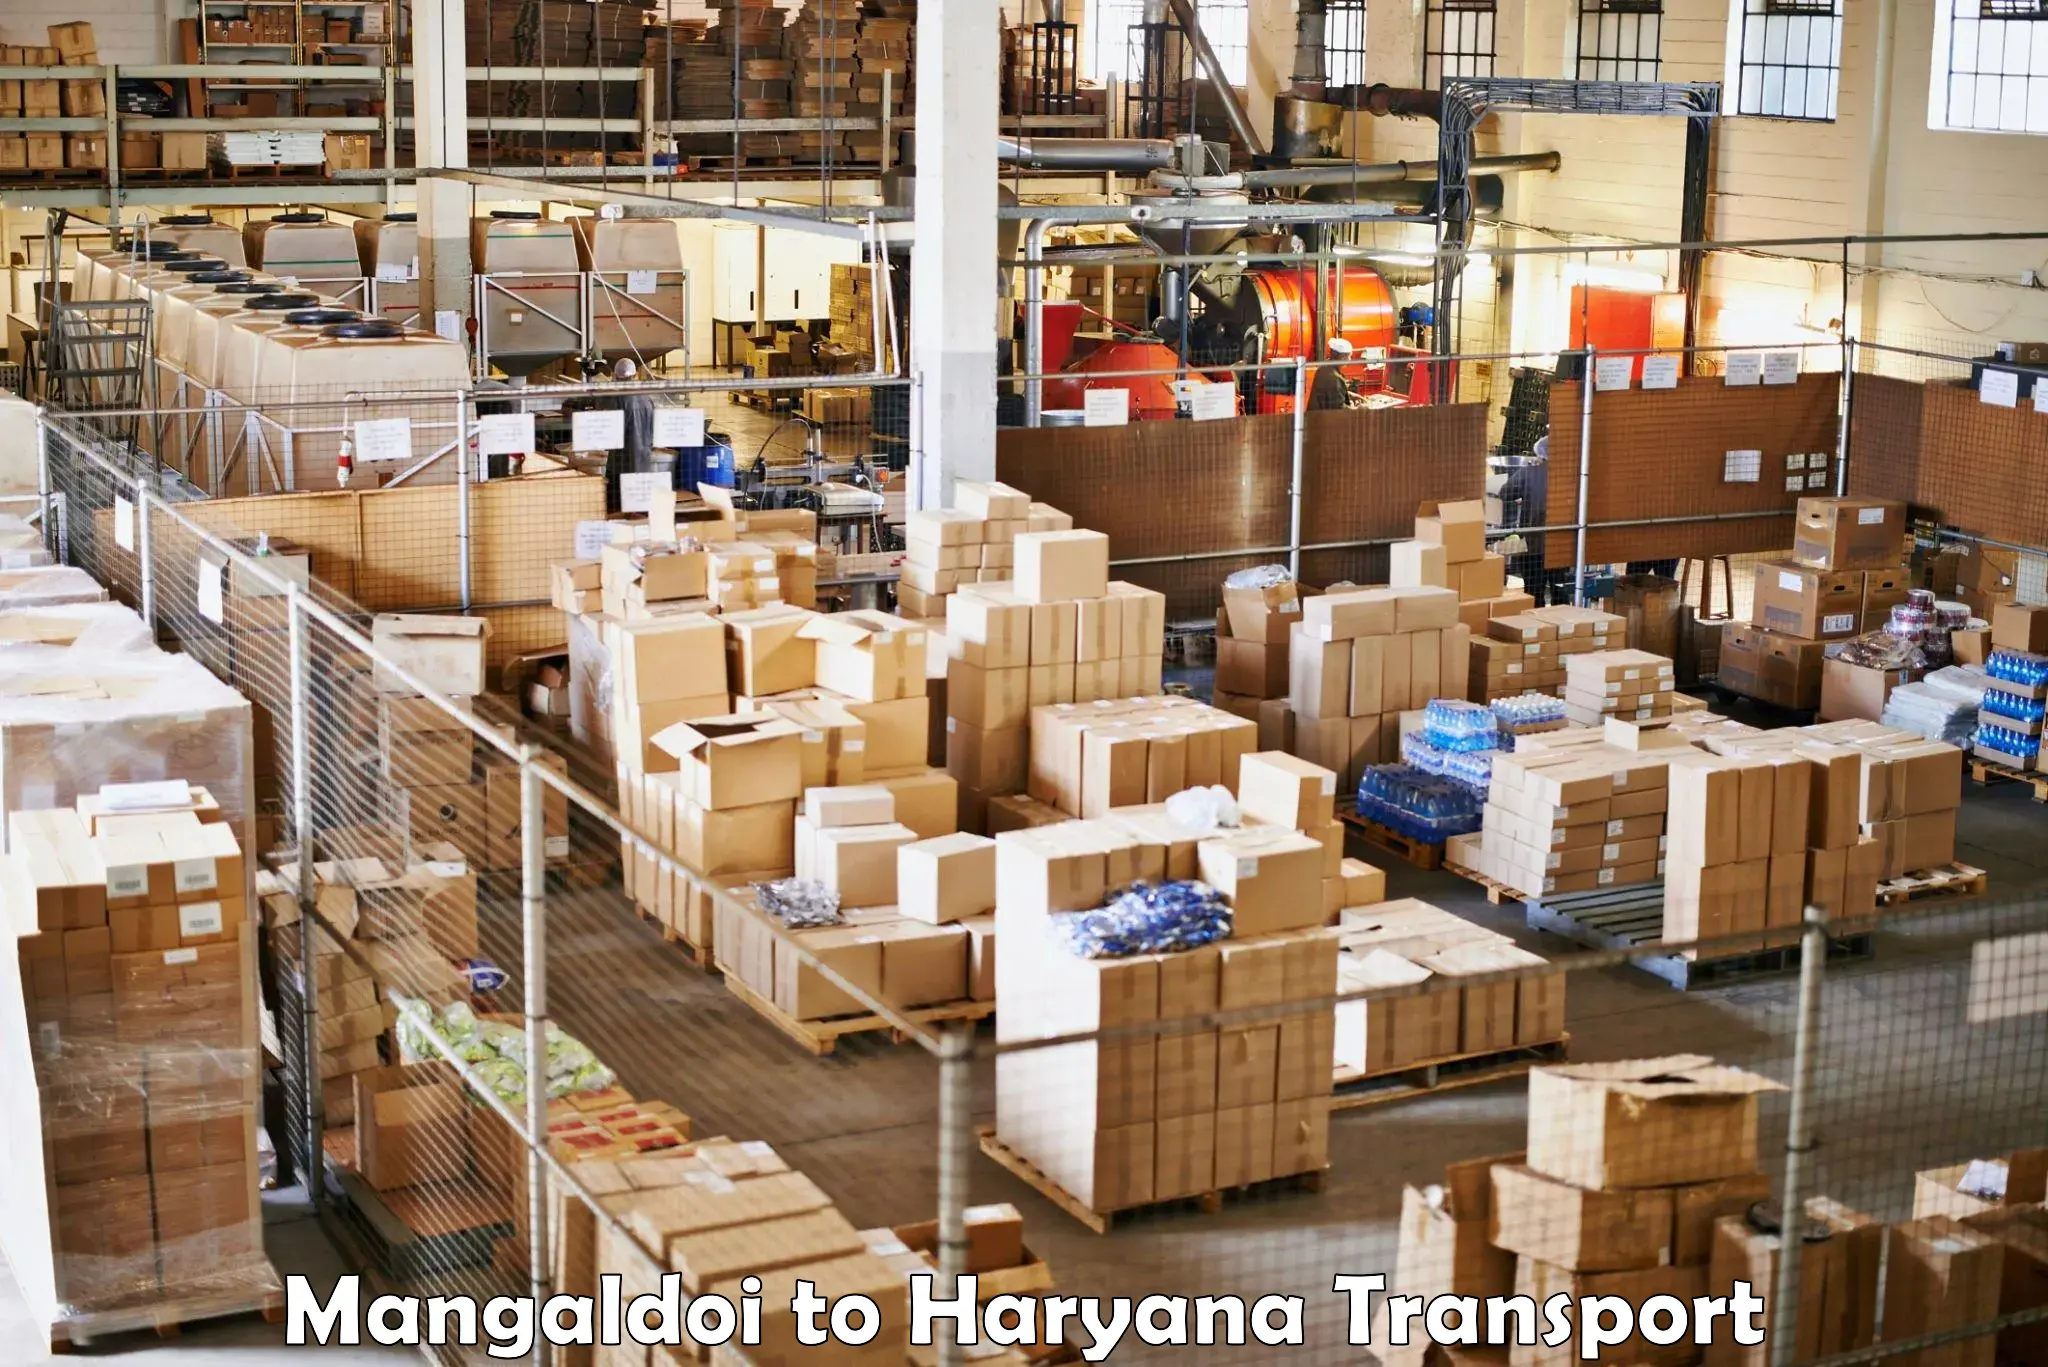 Truck transport companies in India Mangaldoi to Karnal